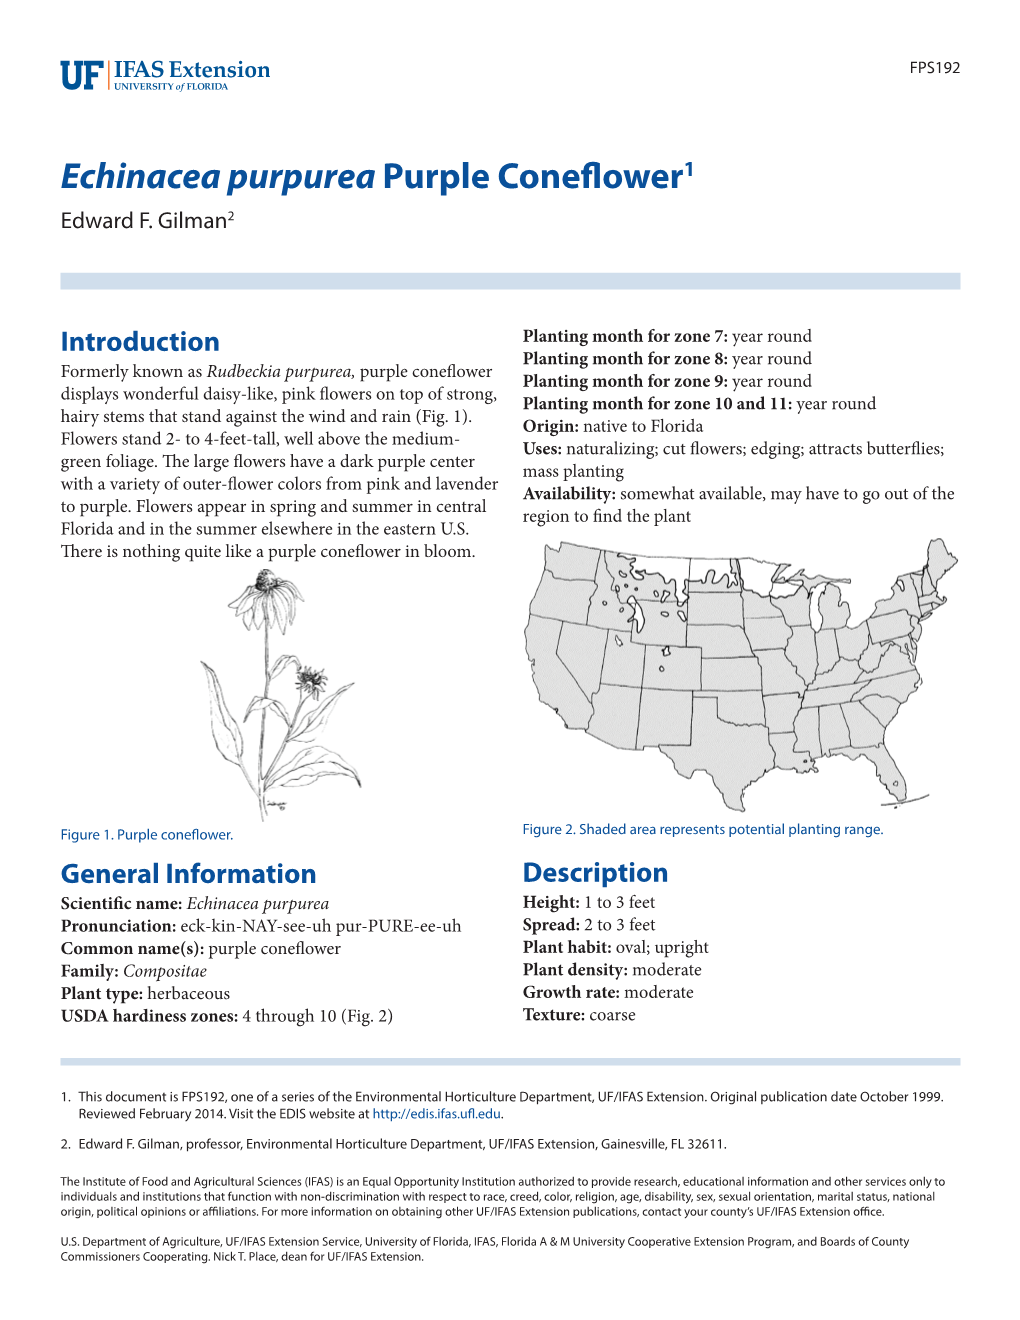 Echinacea Purpurea Purple Coneflower1 Edward F